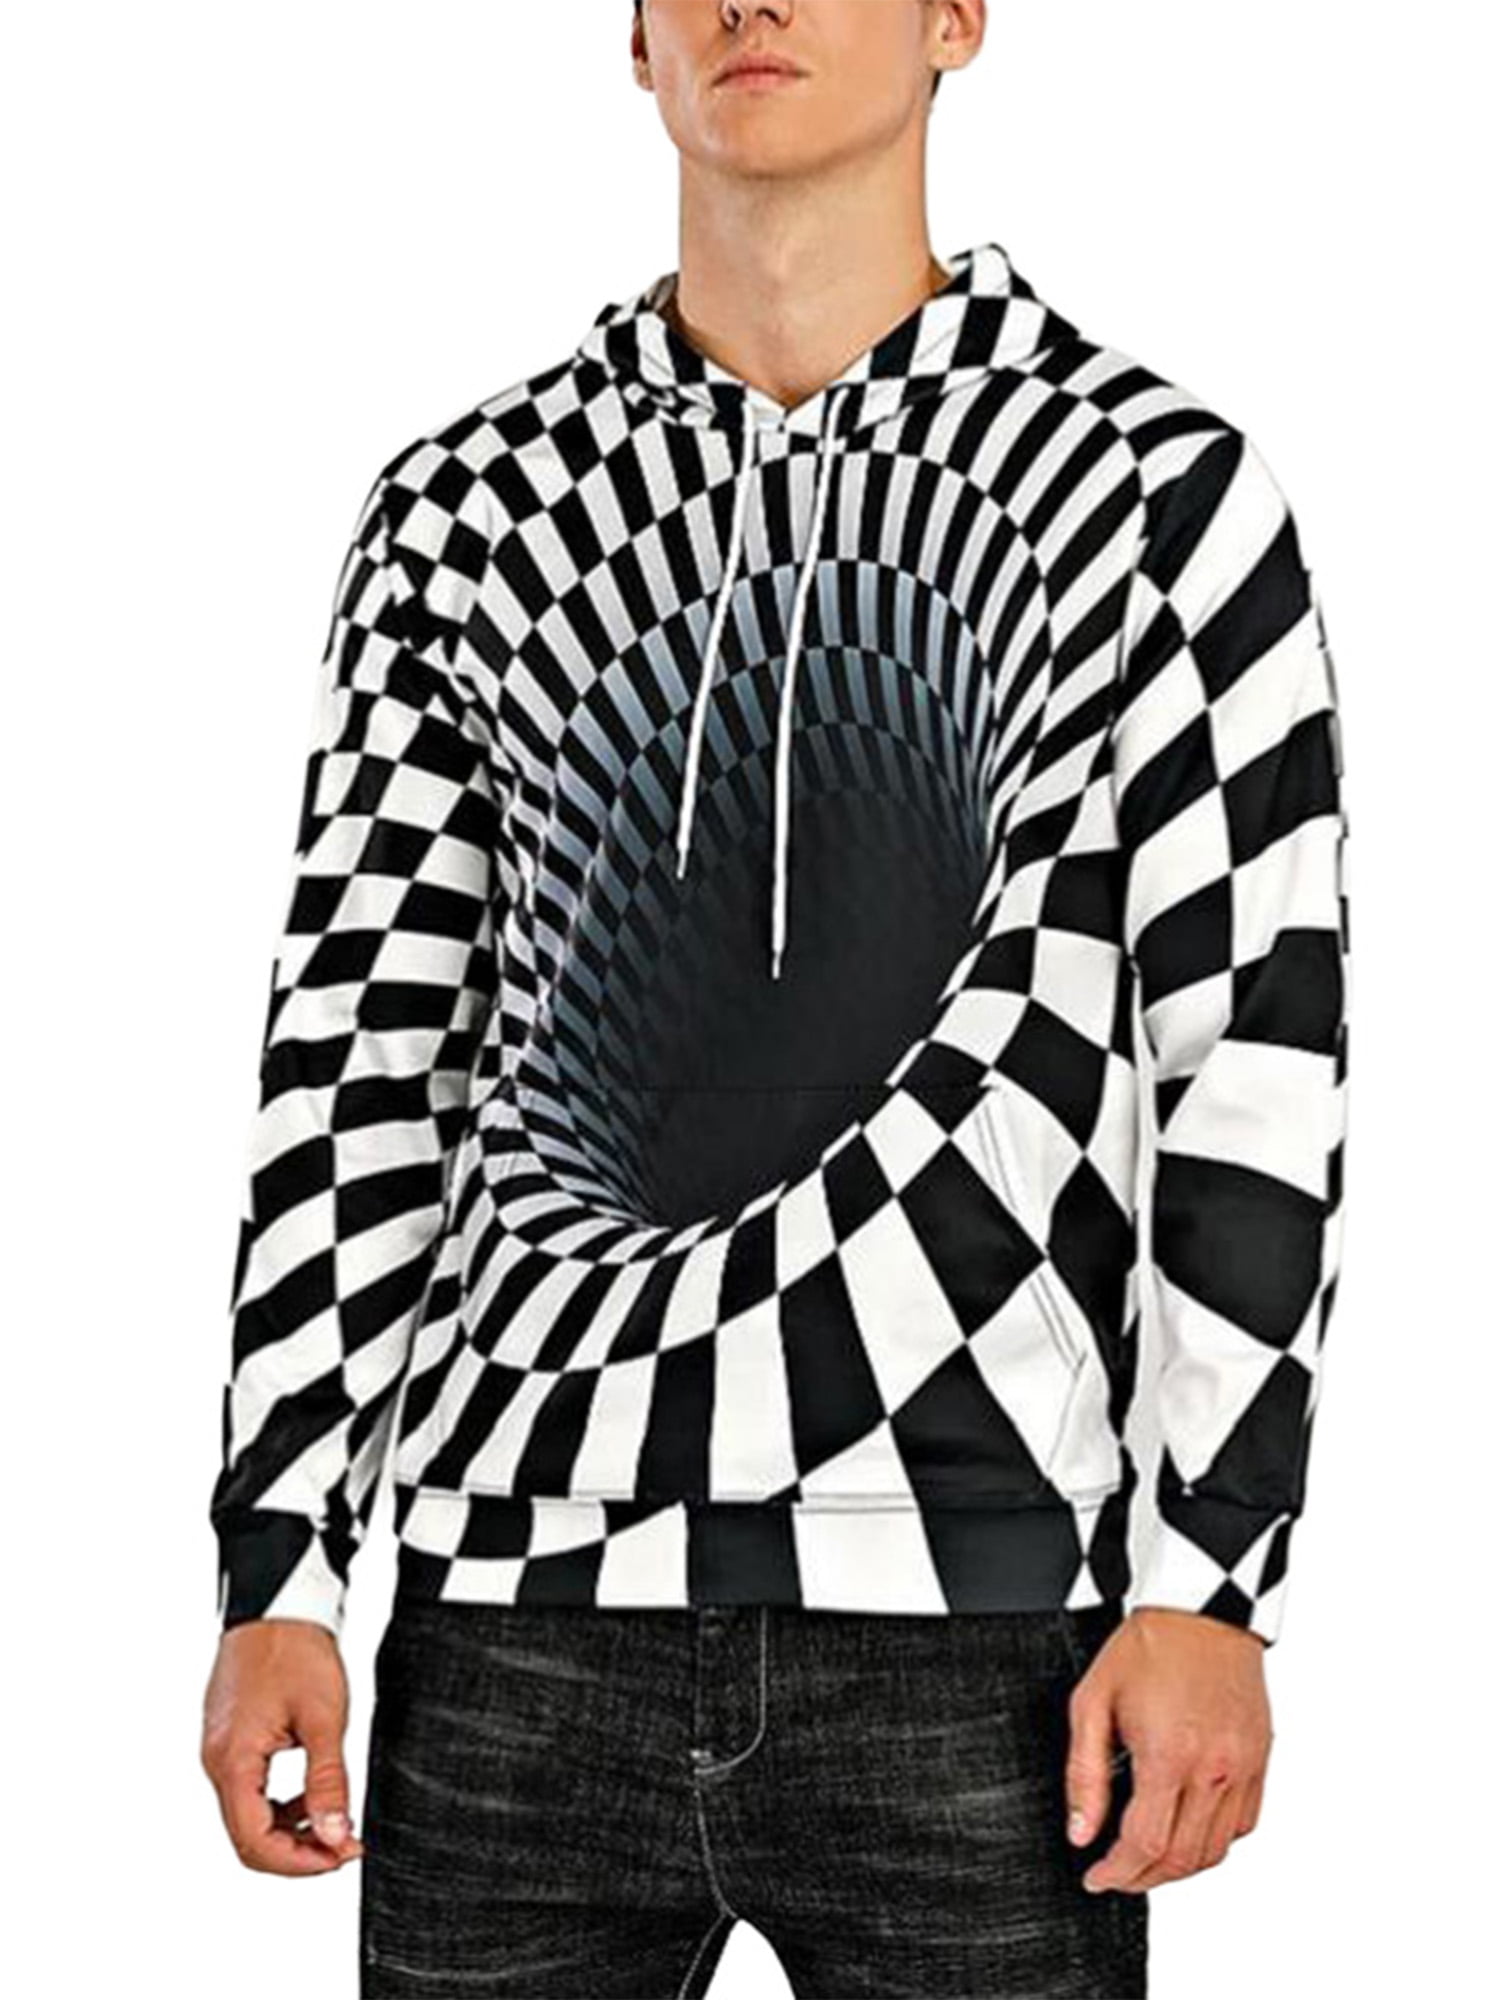 Mens Tops,Mens Autumn Winter 3D Print Long Sleeve Hooded Sweatershirt Top Blouse